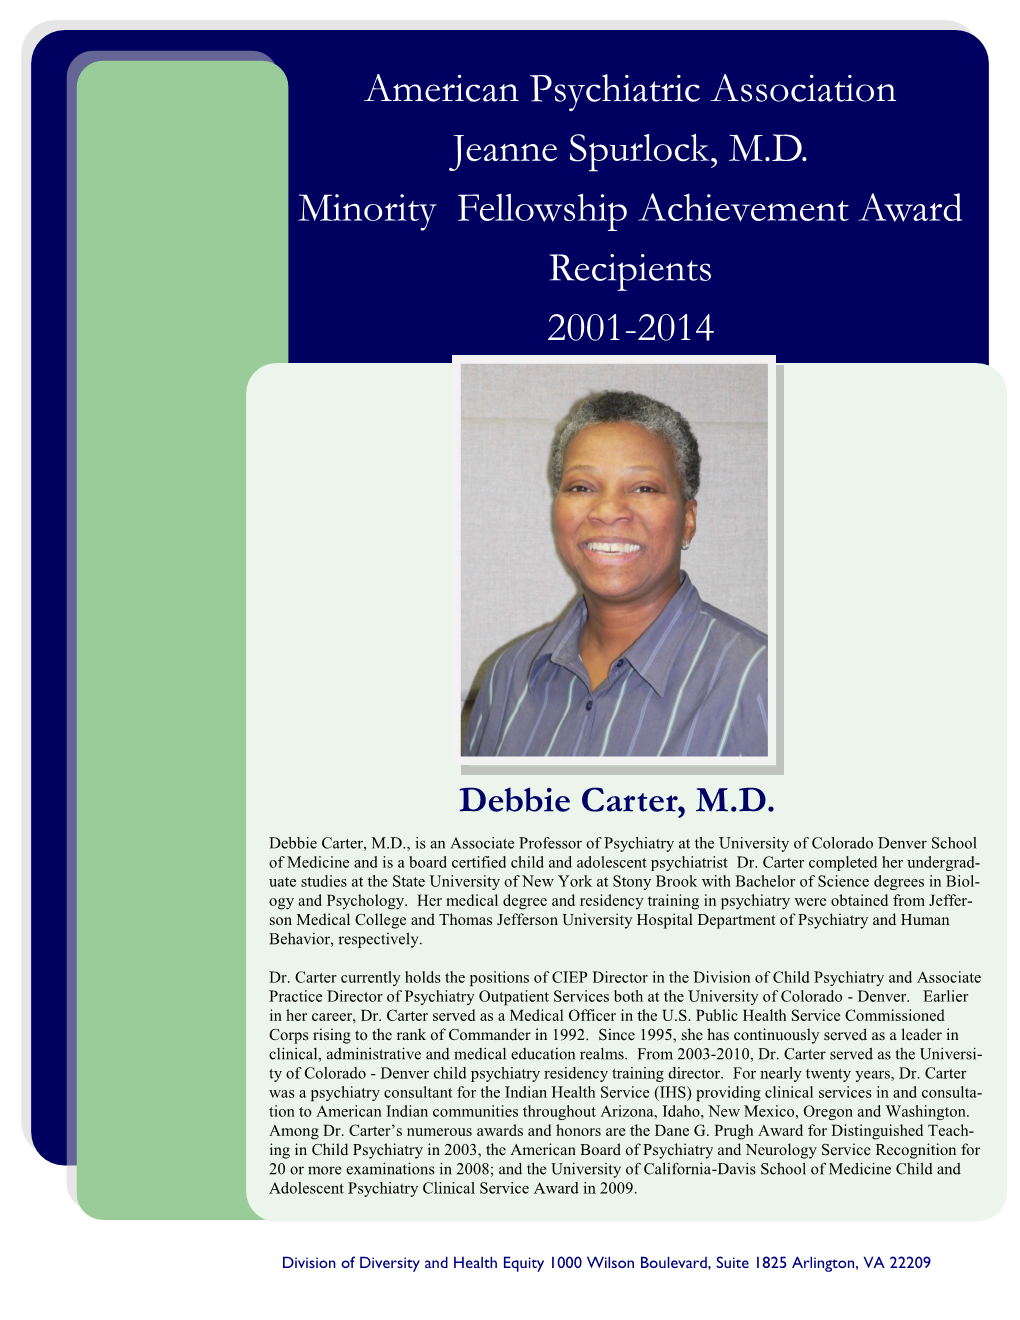 American Psychiatric Association Jeanne Spurlock, M.D. Minority Fellowship Achievement Award Recipients 2001-2014